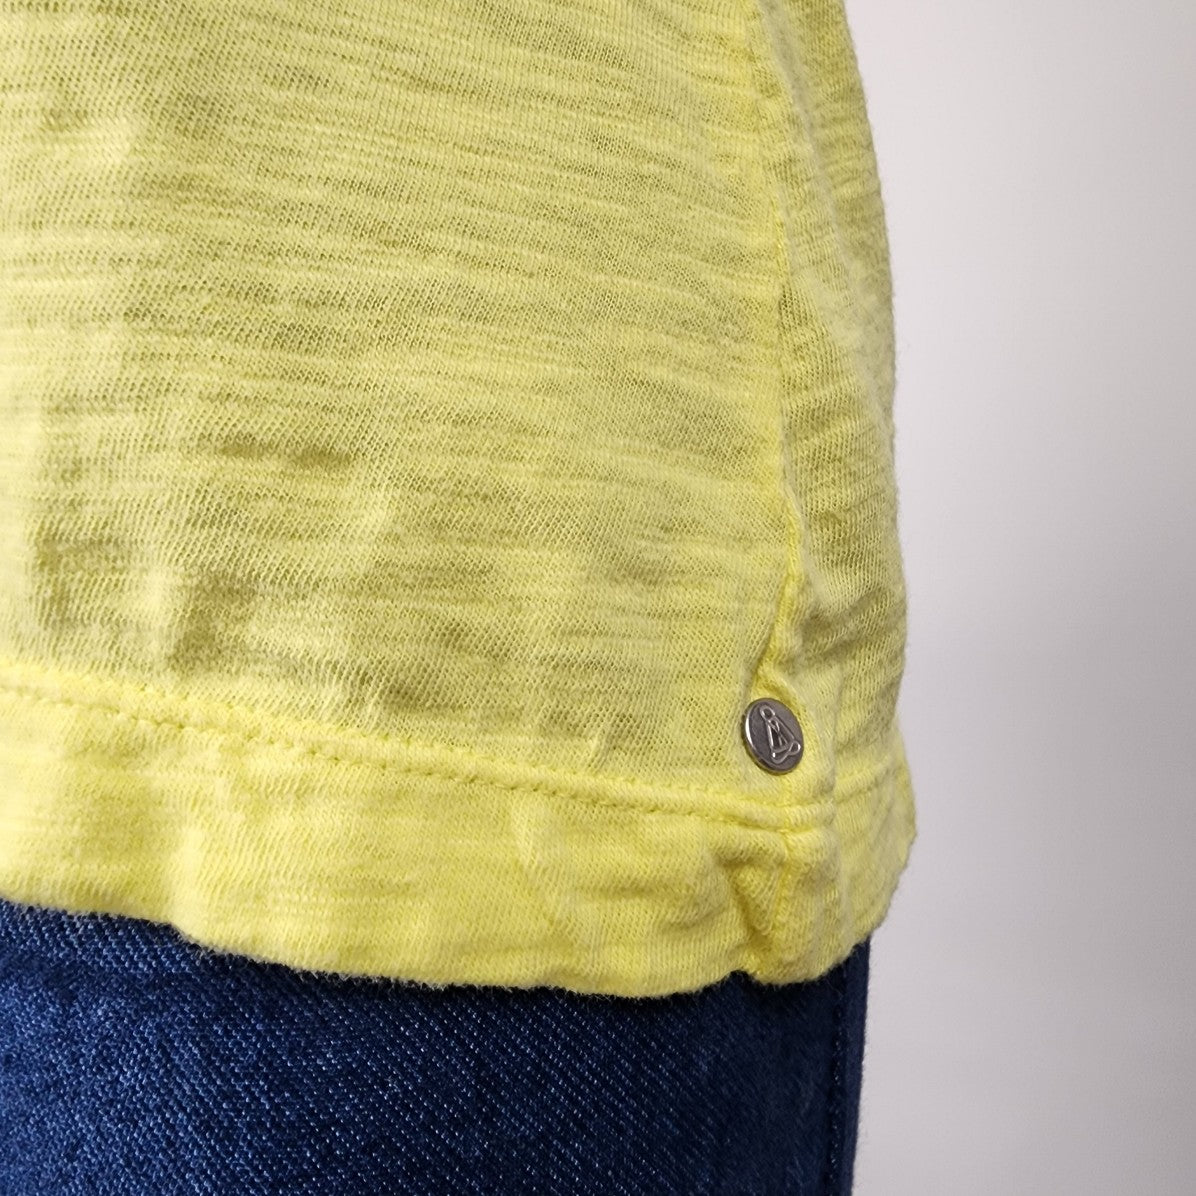 Neon Buddha Yellow Cotton Sleeveless Top Size XS/S